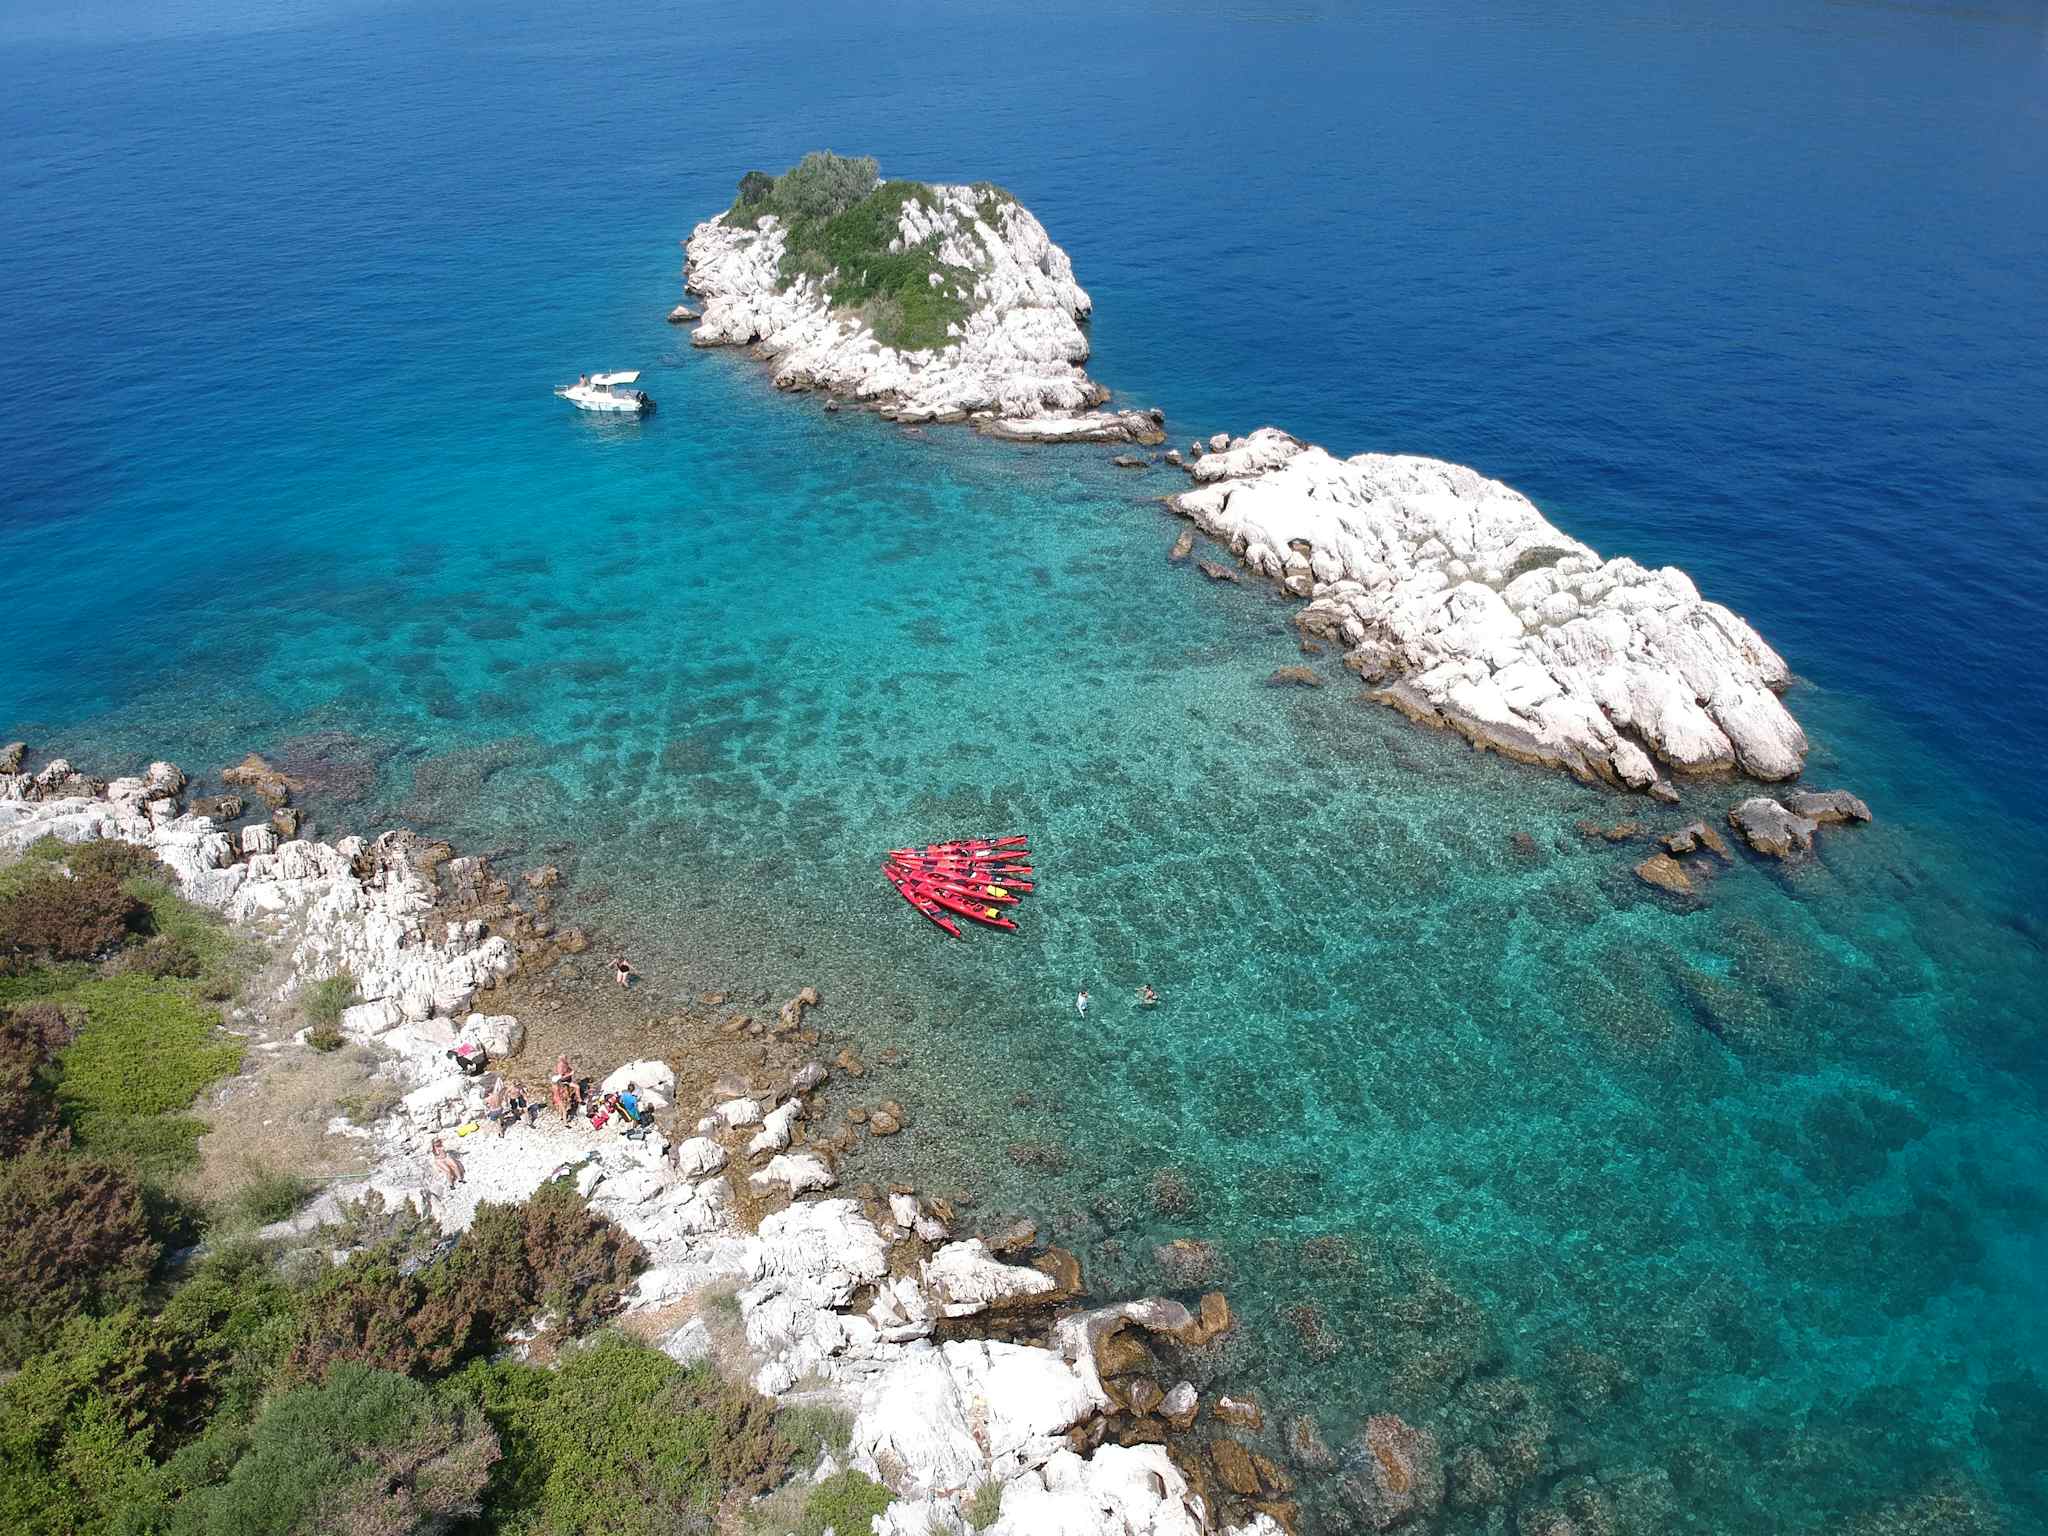 Kayaking solta croatia. Photo: host